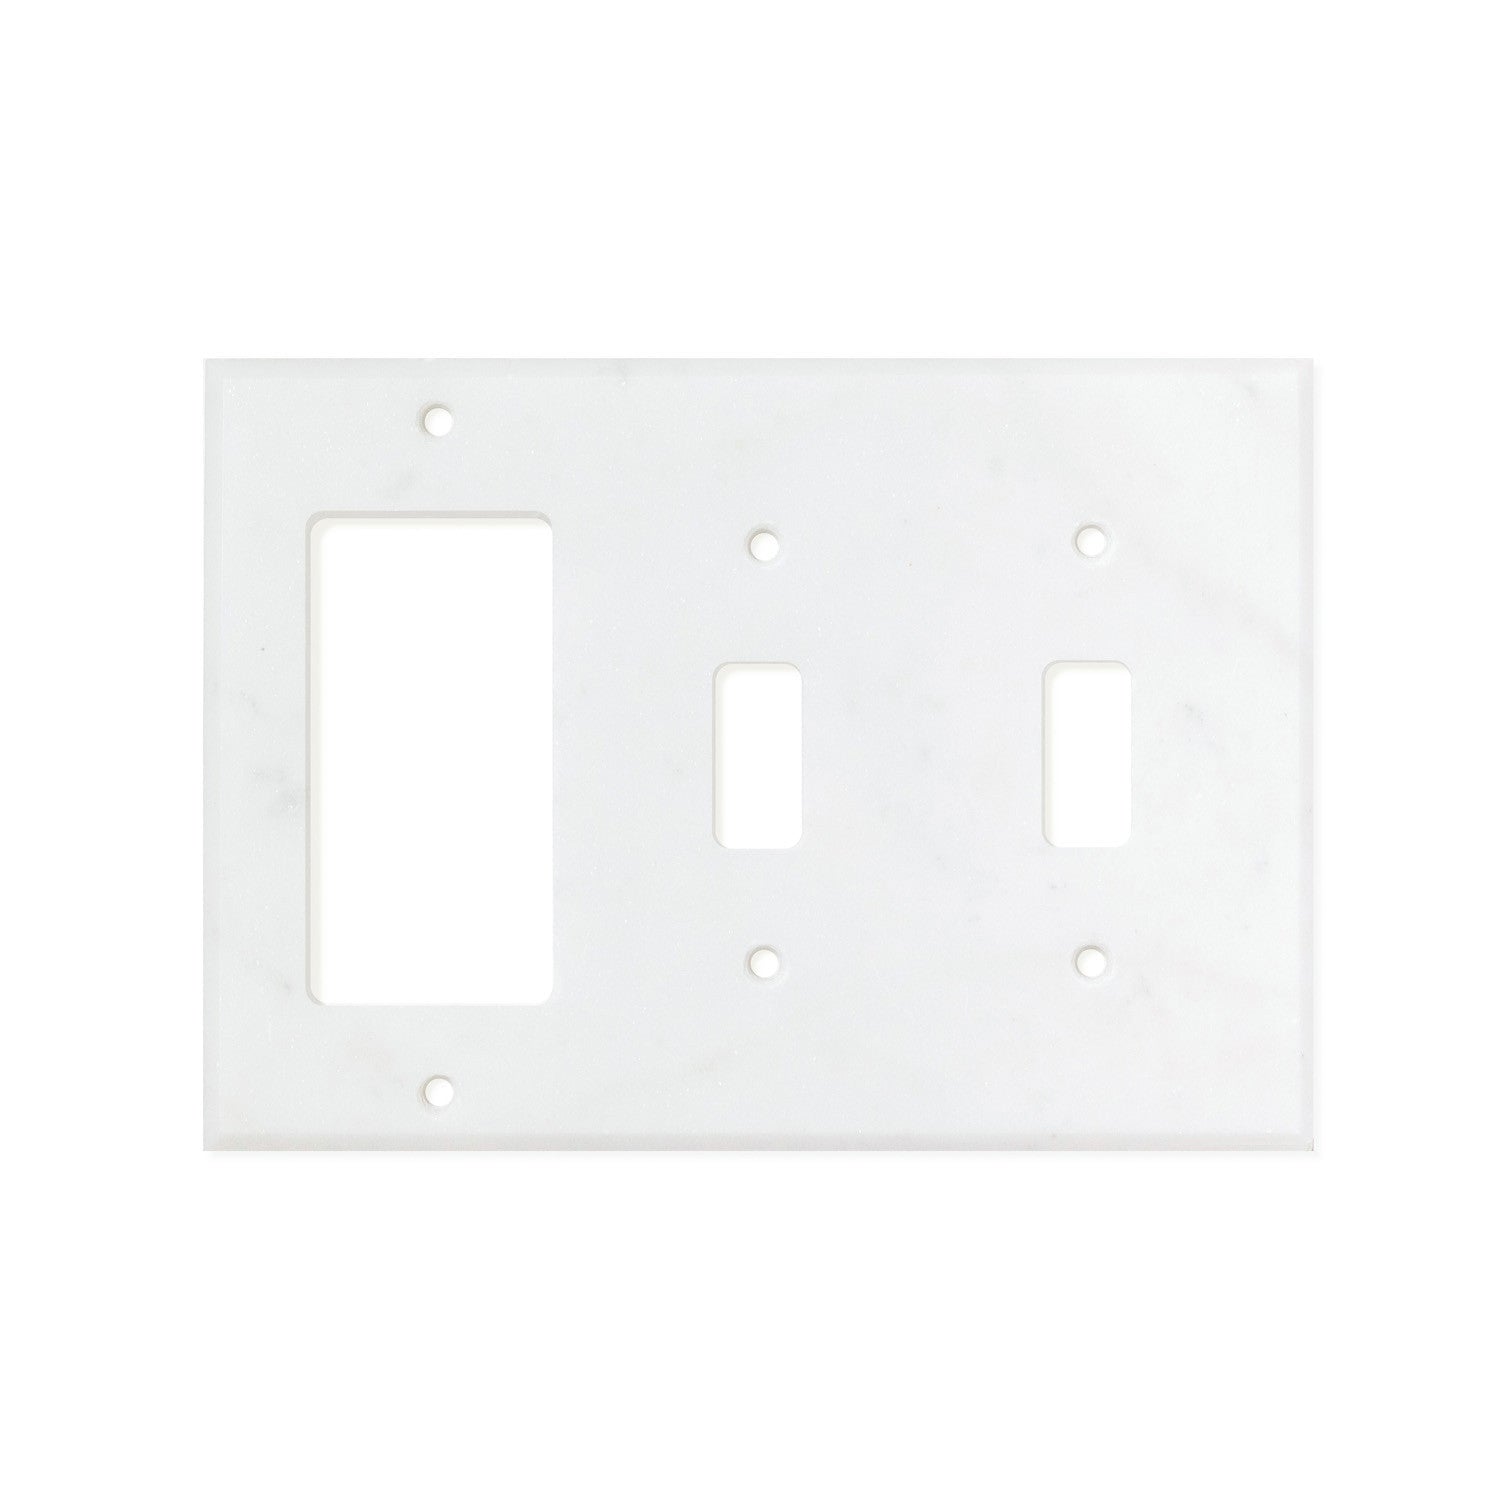 Bianco Carrara (Carrara White) Marble Switch Plate Cover, Polished (DOUBLE TOGGLE ROCKER) - Tilephile